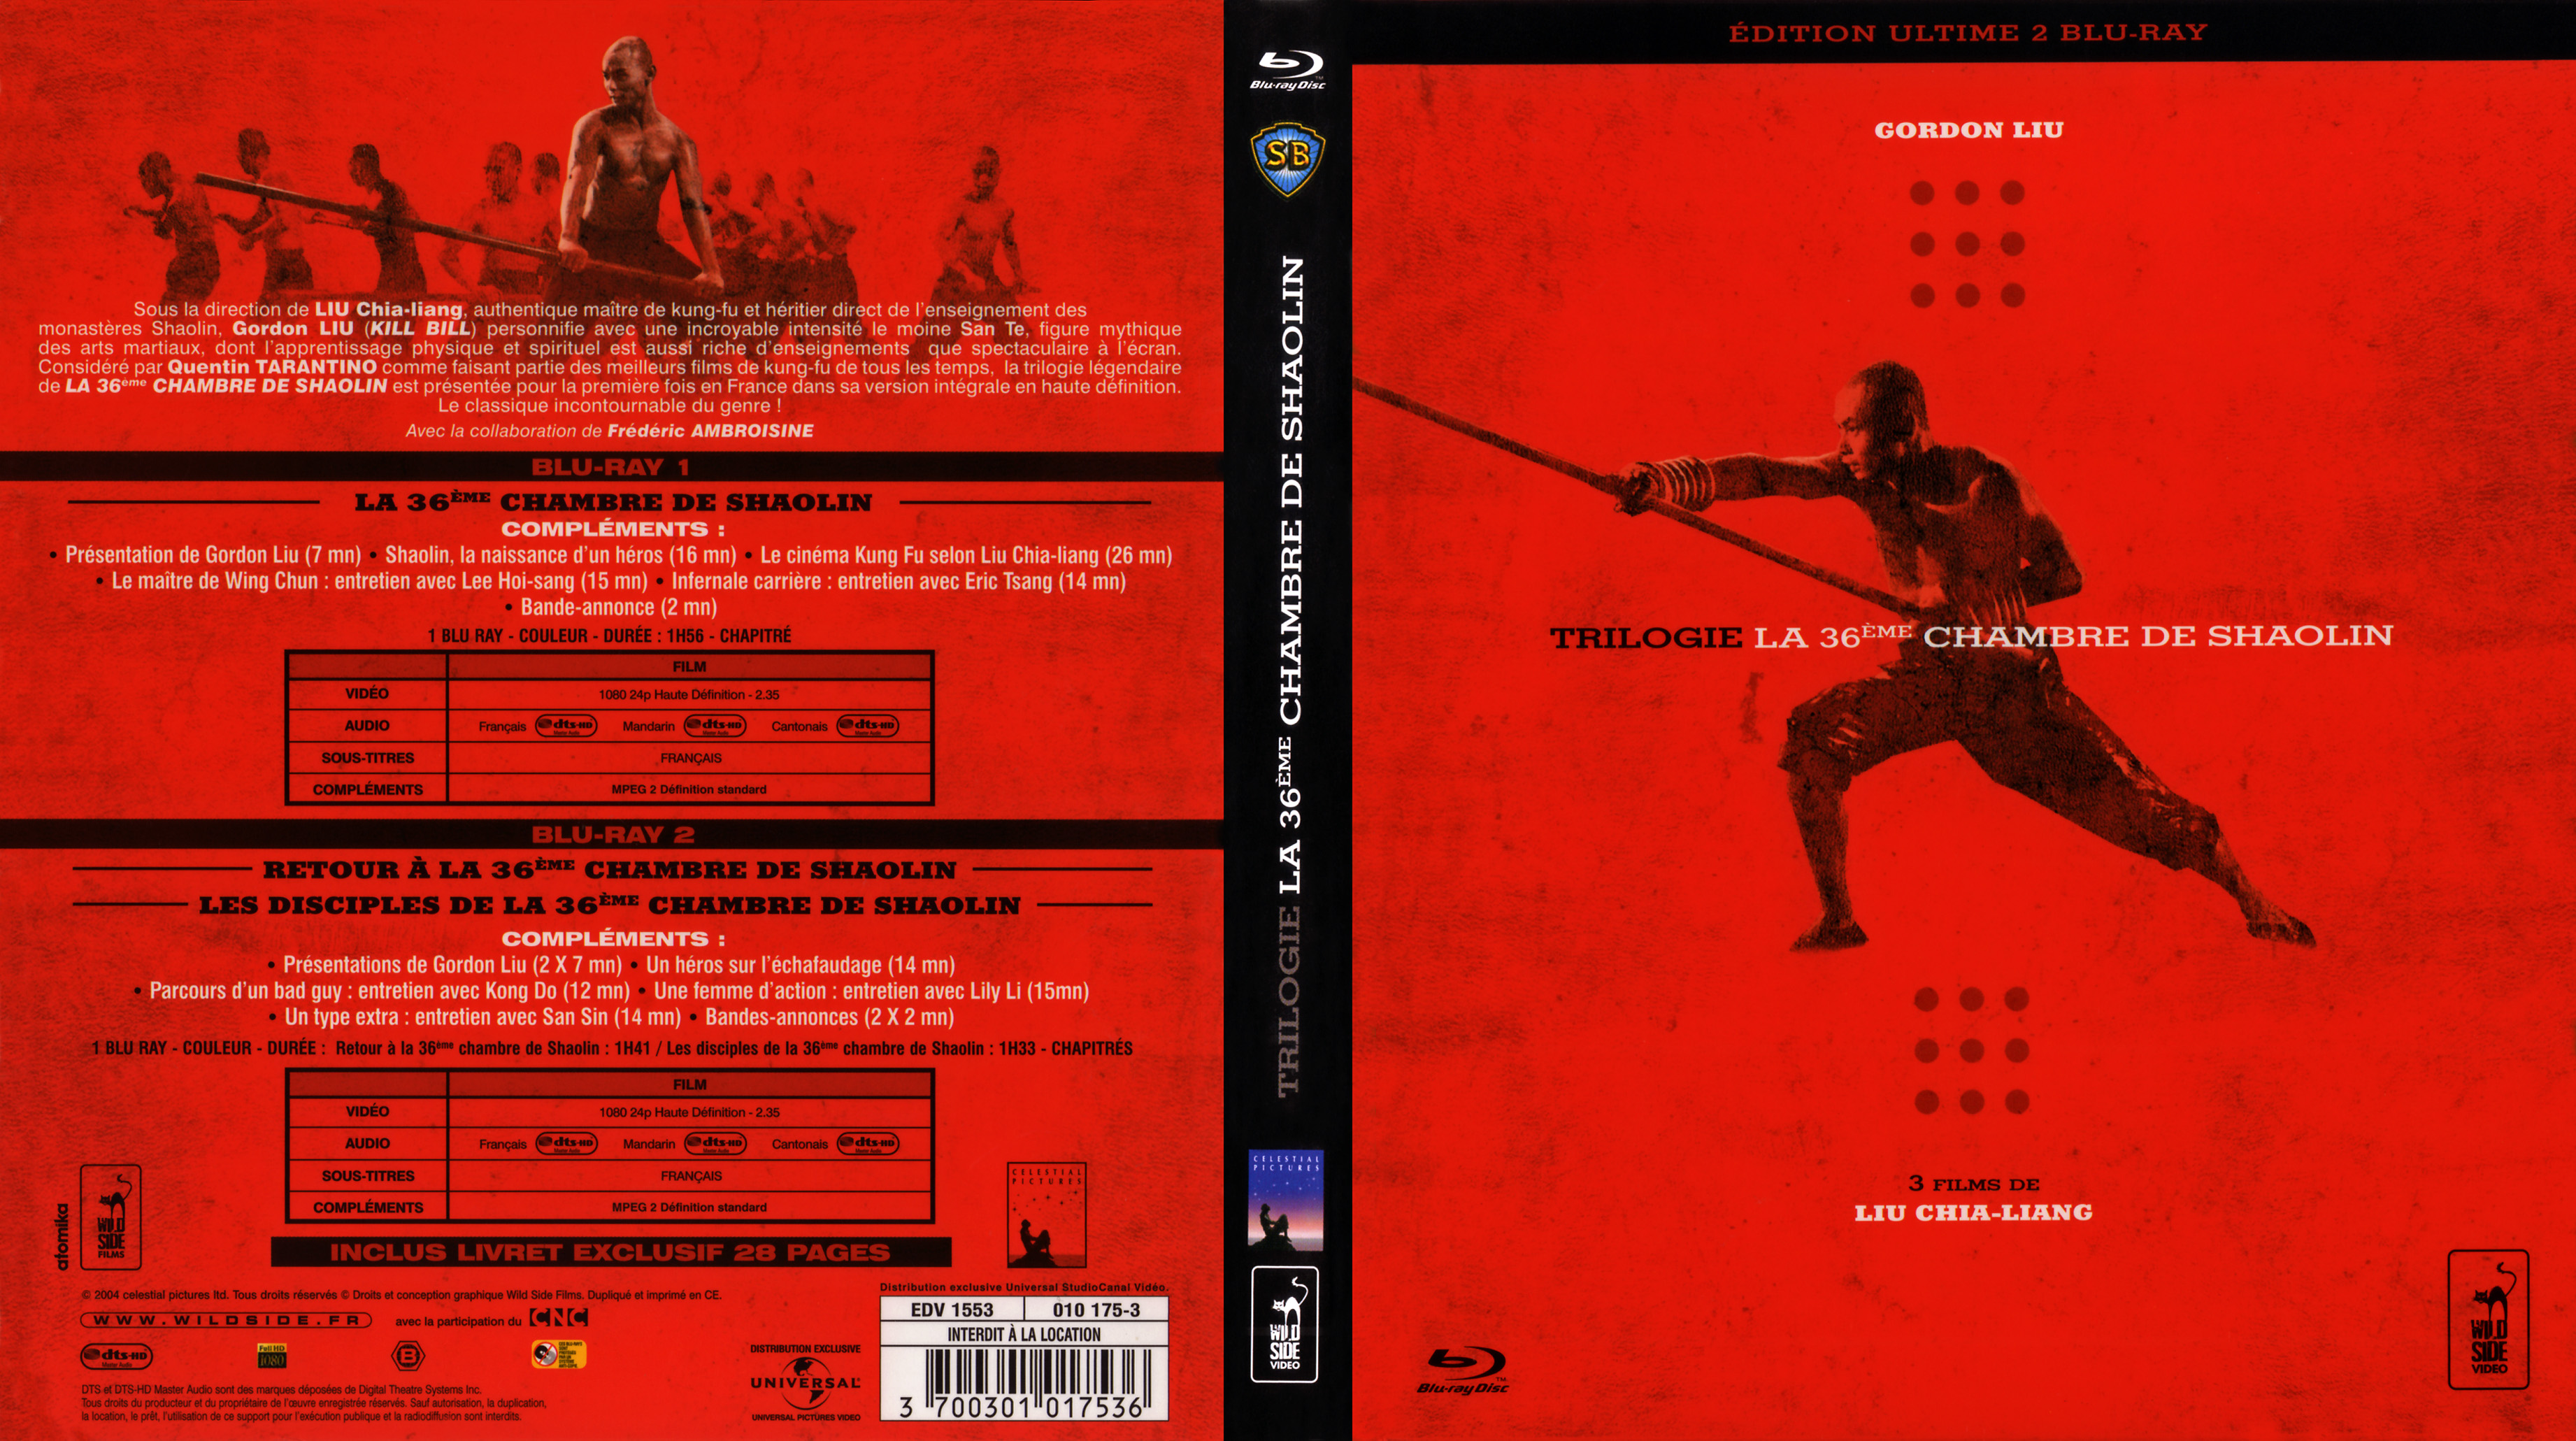 Jaquette DVD Trilogie La 36eme chambre (BLU-RAY)